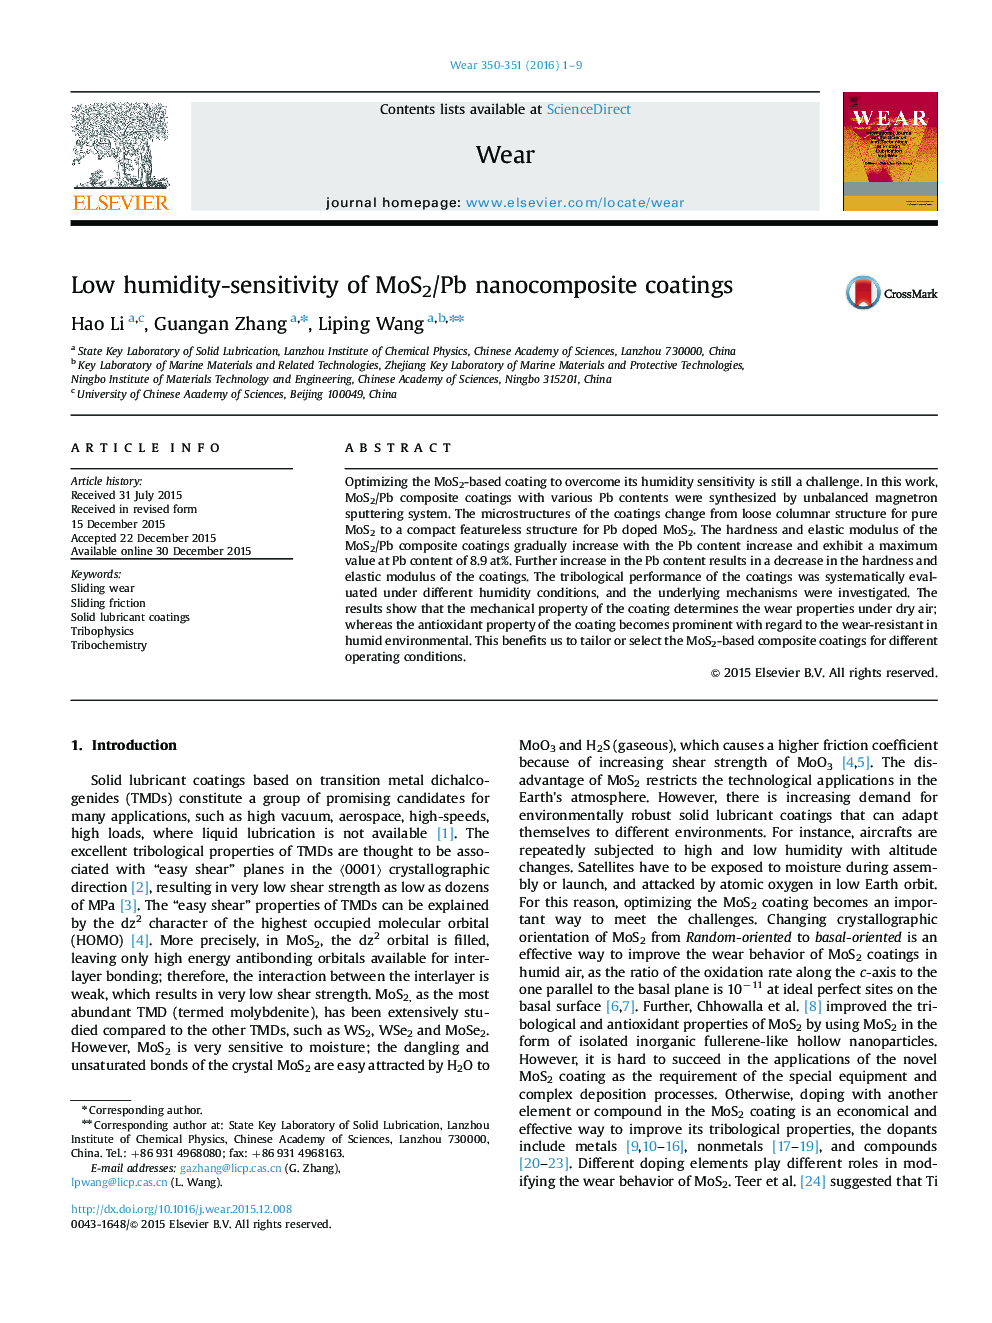 Low humidity-sensitivity of MoS2/Pb nanocomposite coatings